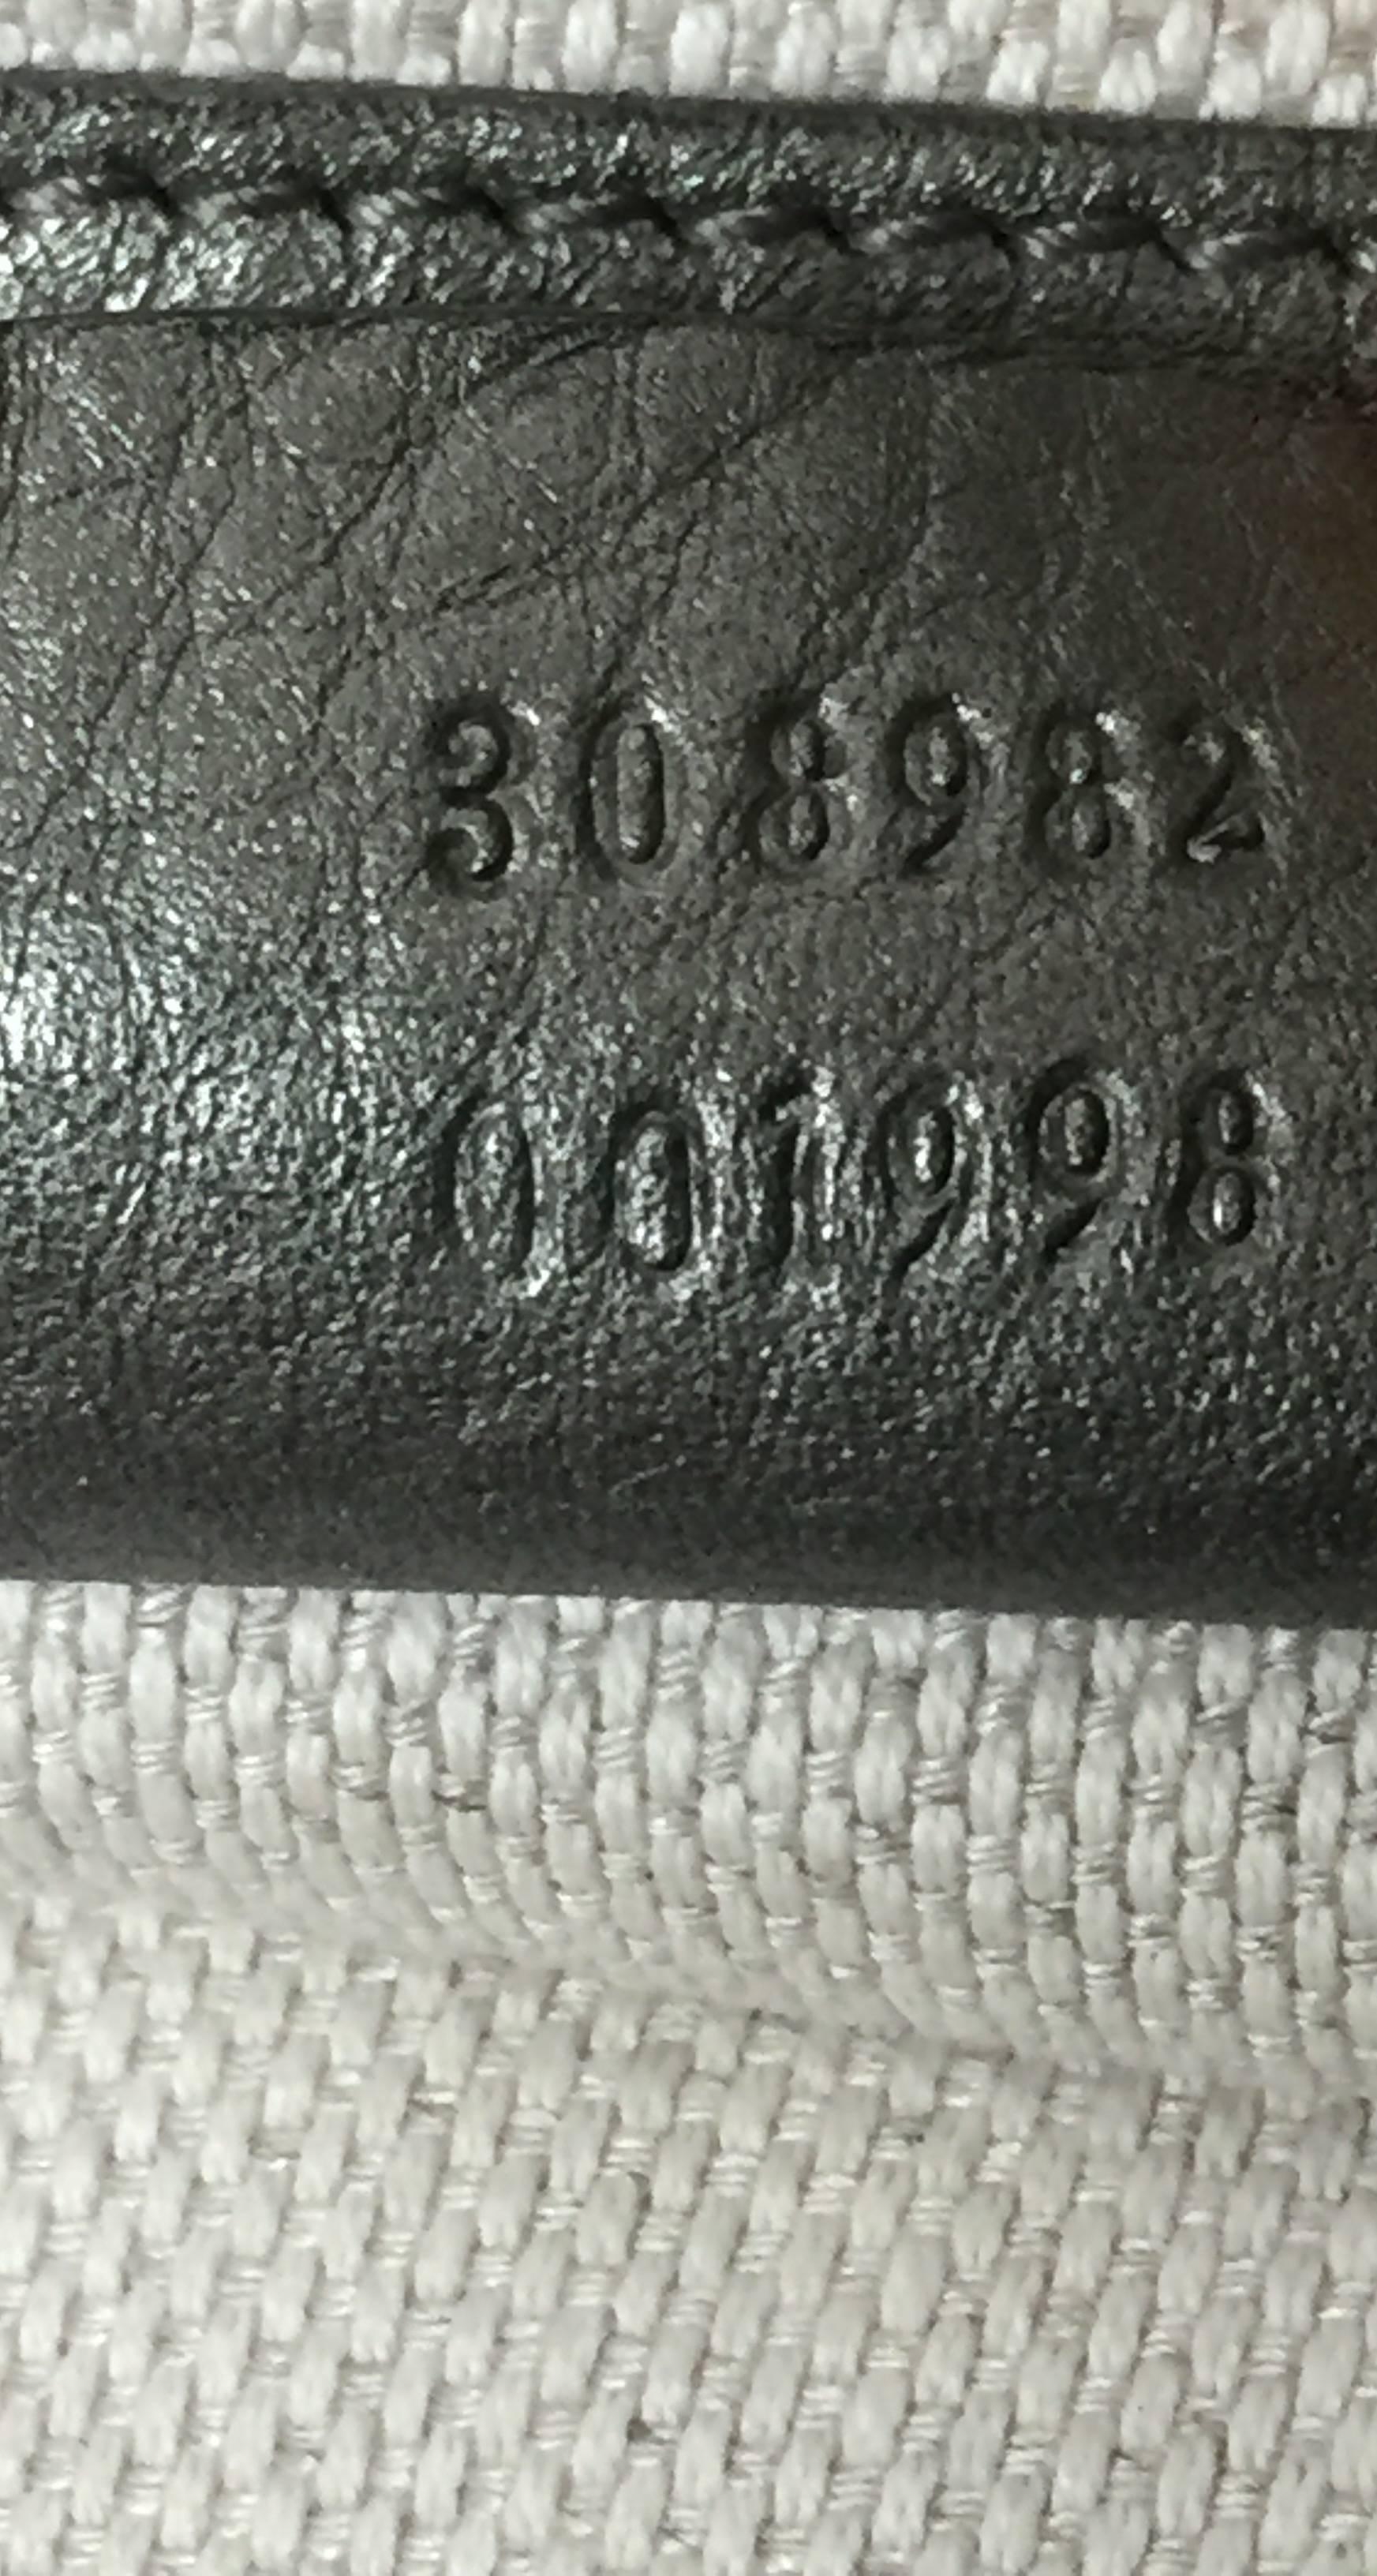 Gucci Soho Shoulder Bag Chain Strap Leather Medium 3